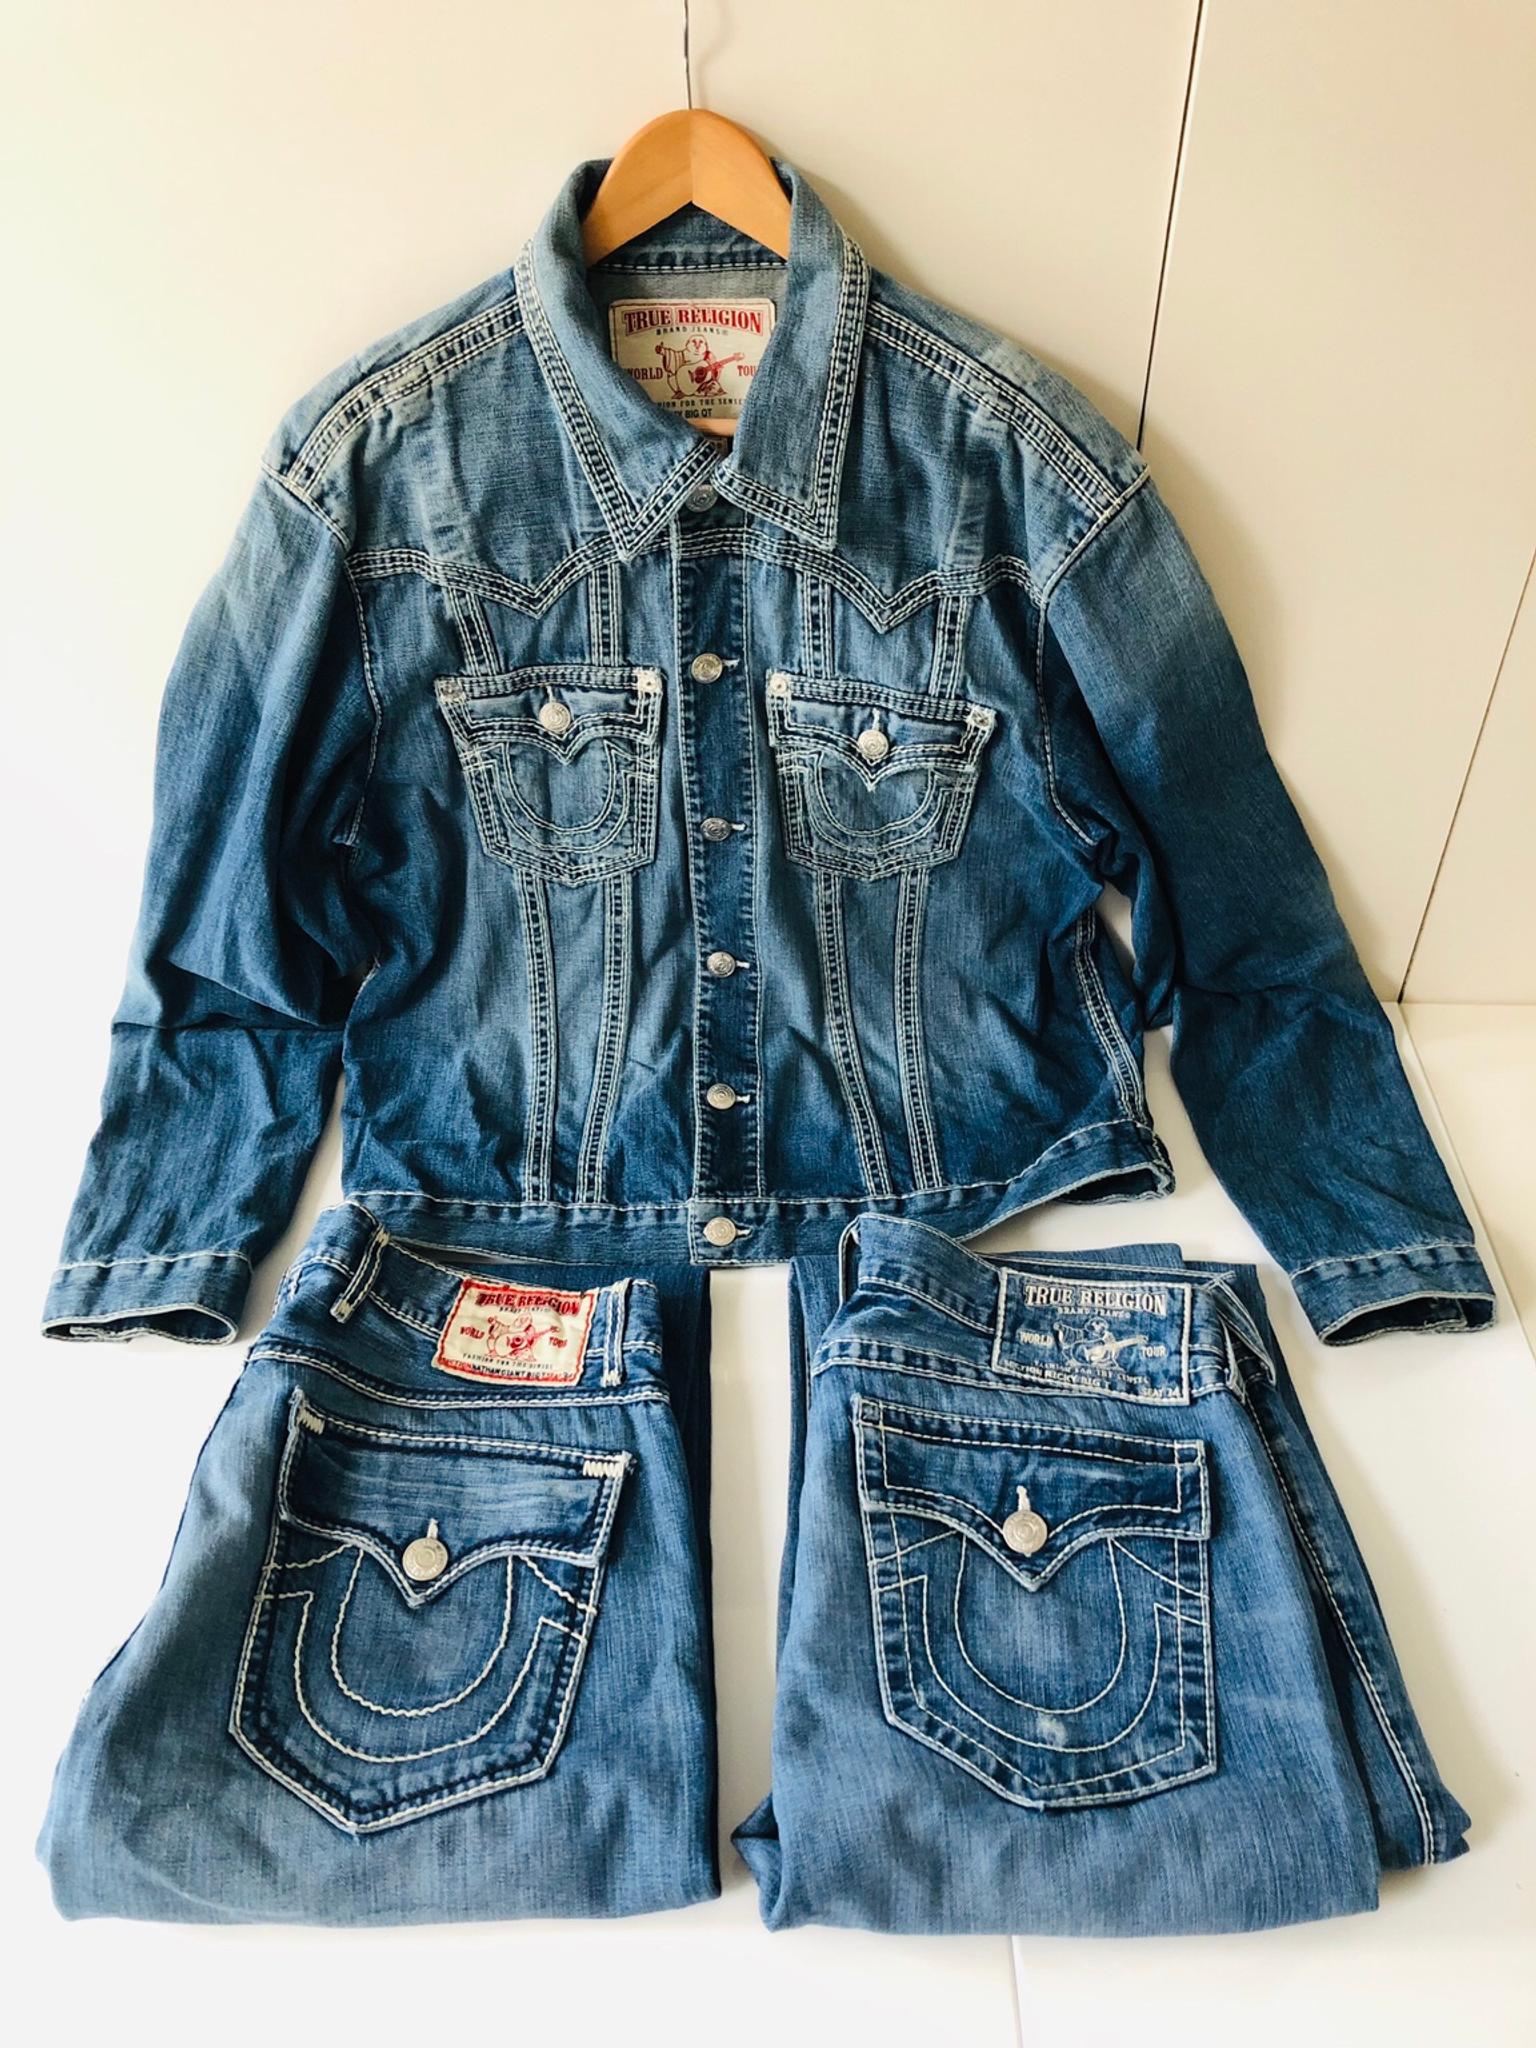 true religion jean jacket set